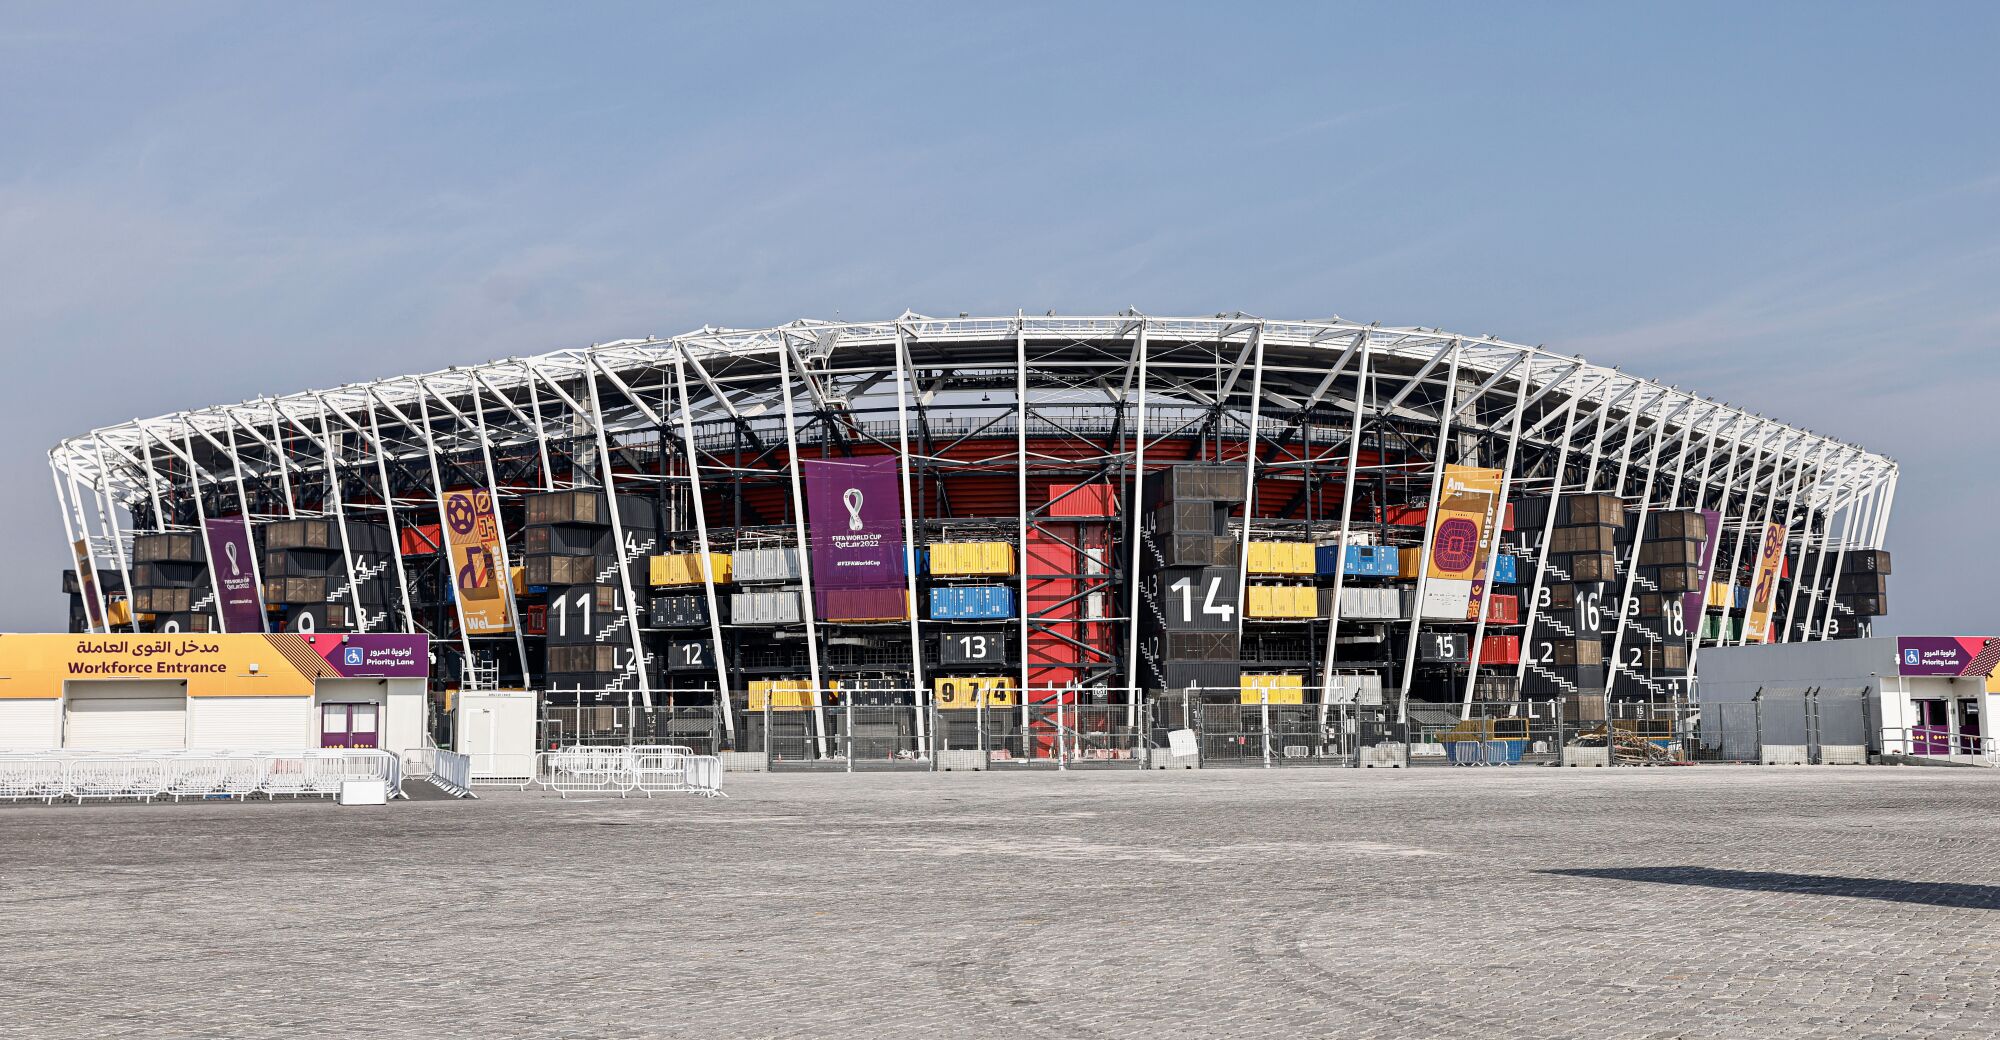 Stadium 974 in the Ras Abu Aboud district of Doha, Qatar.